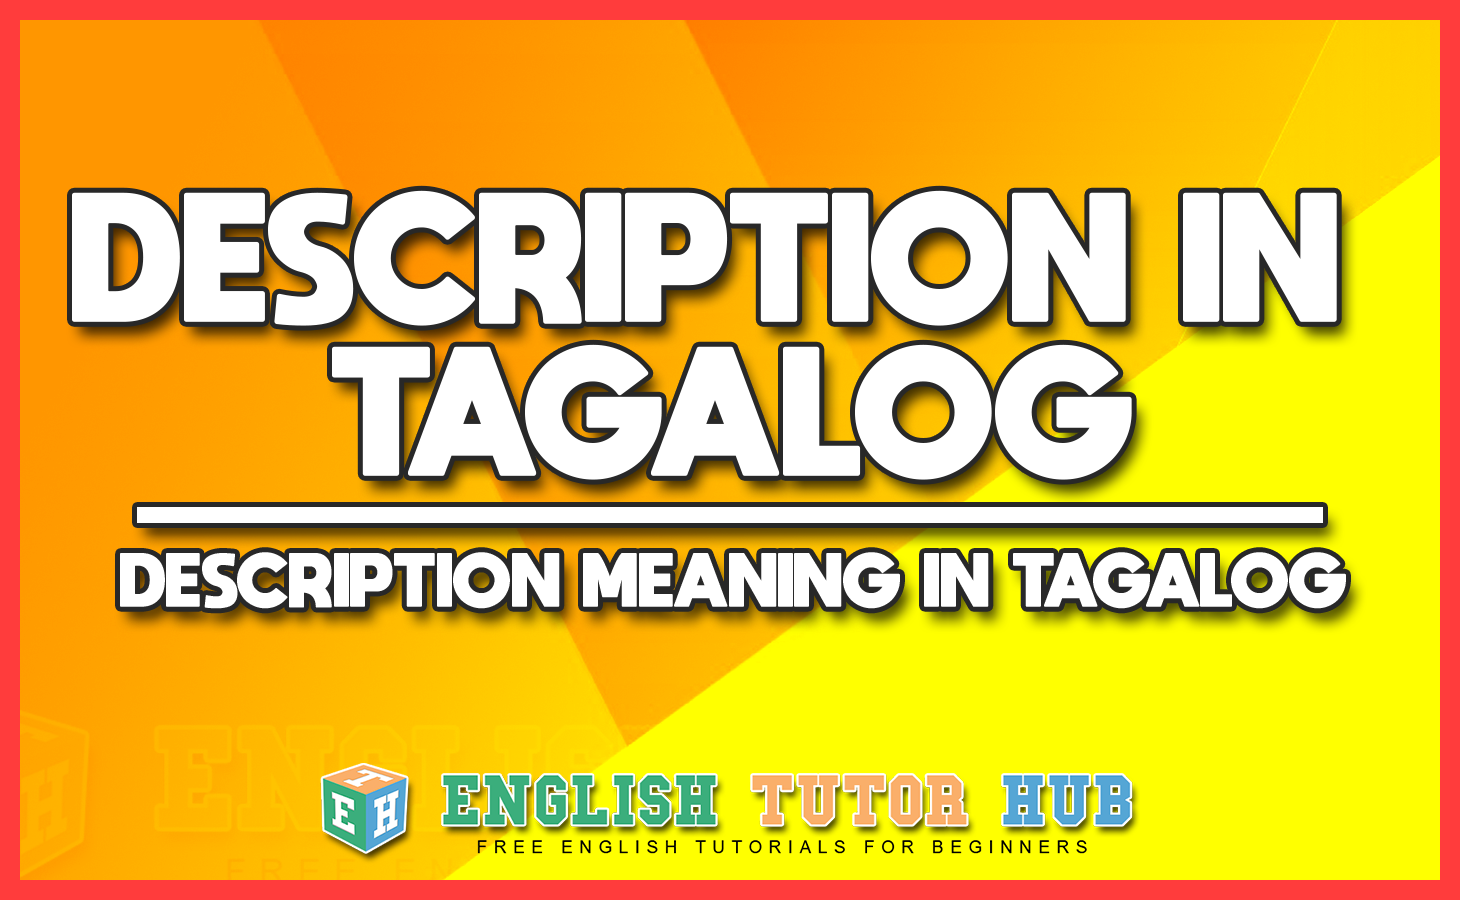 DESCRIPTION IN TAGALOG - DESCRIPTION MEANING IN TAGALOG